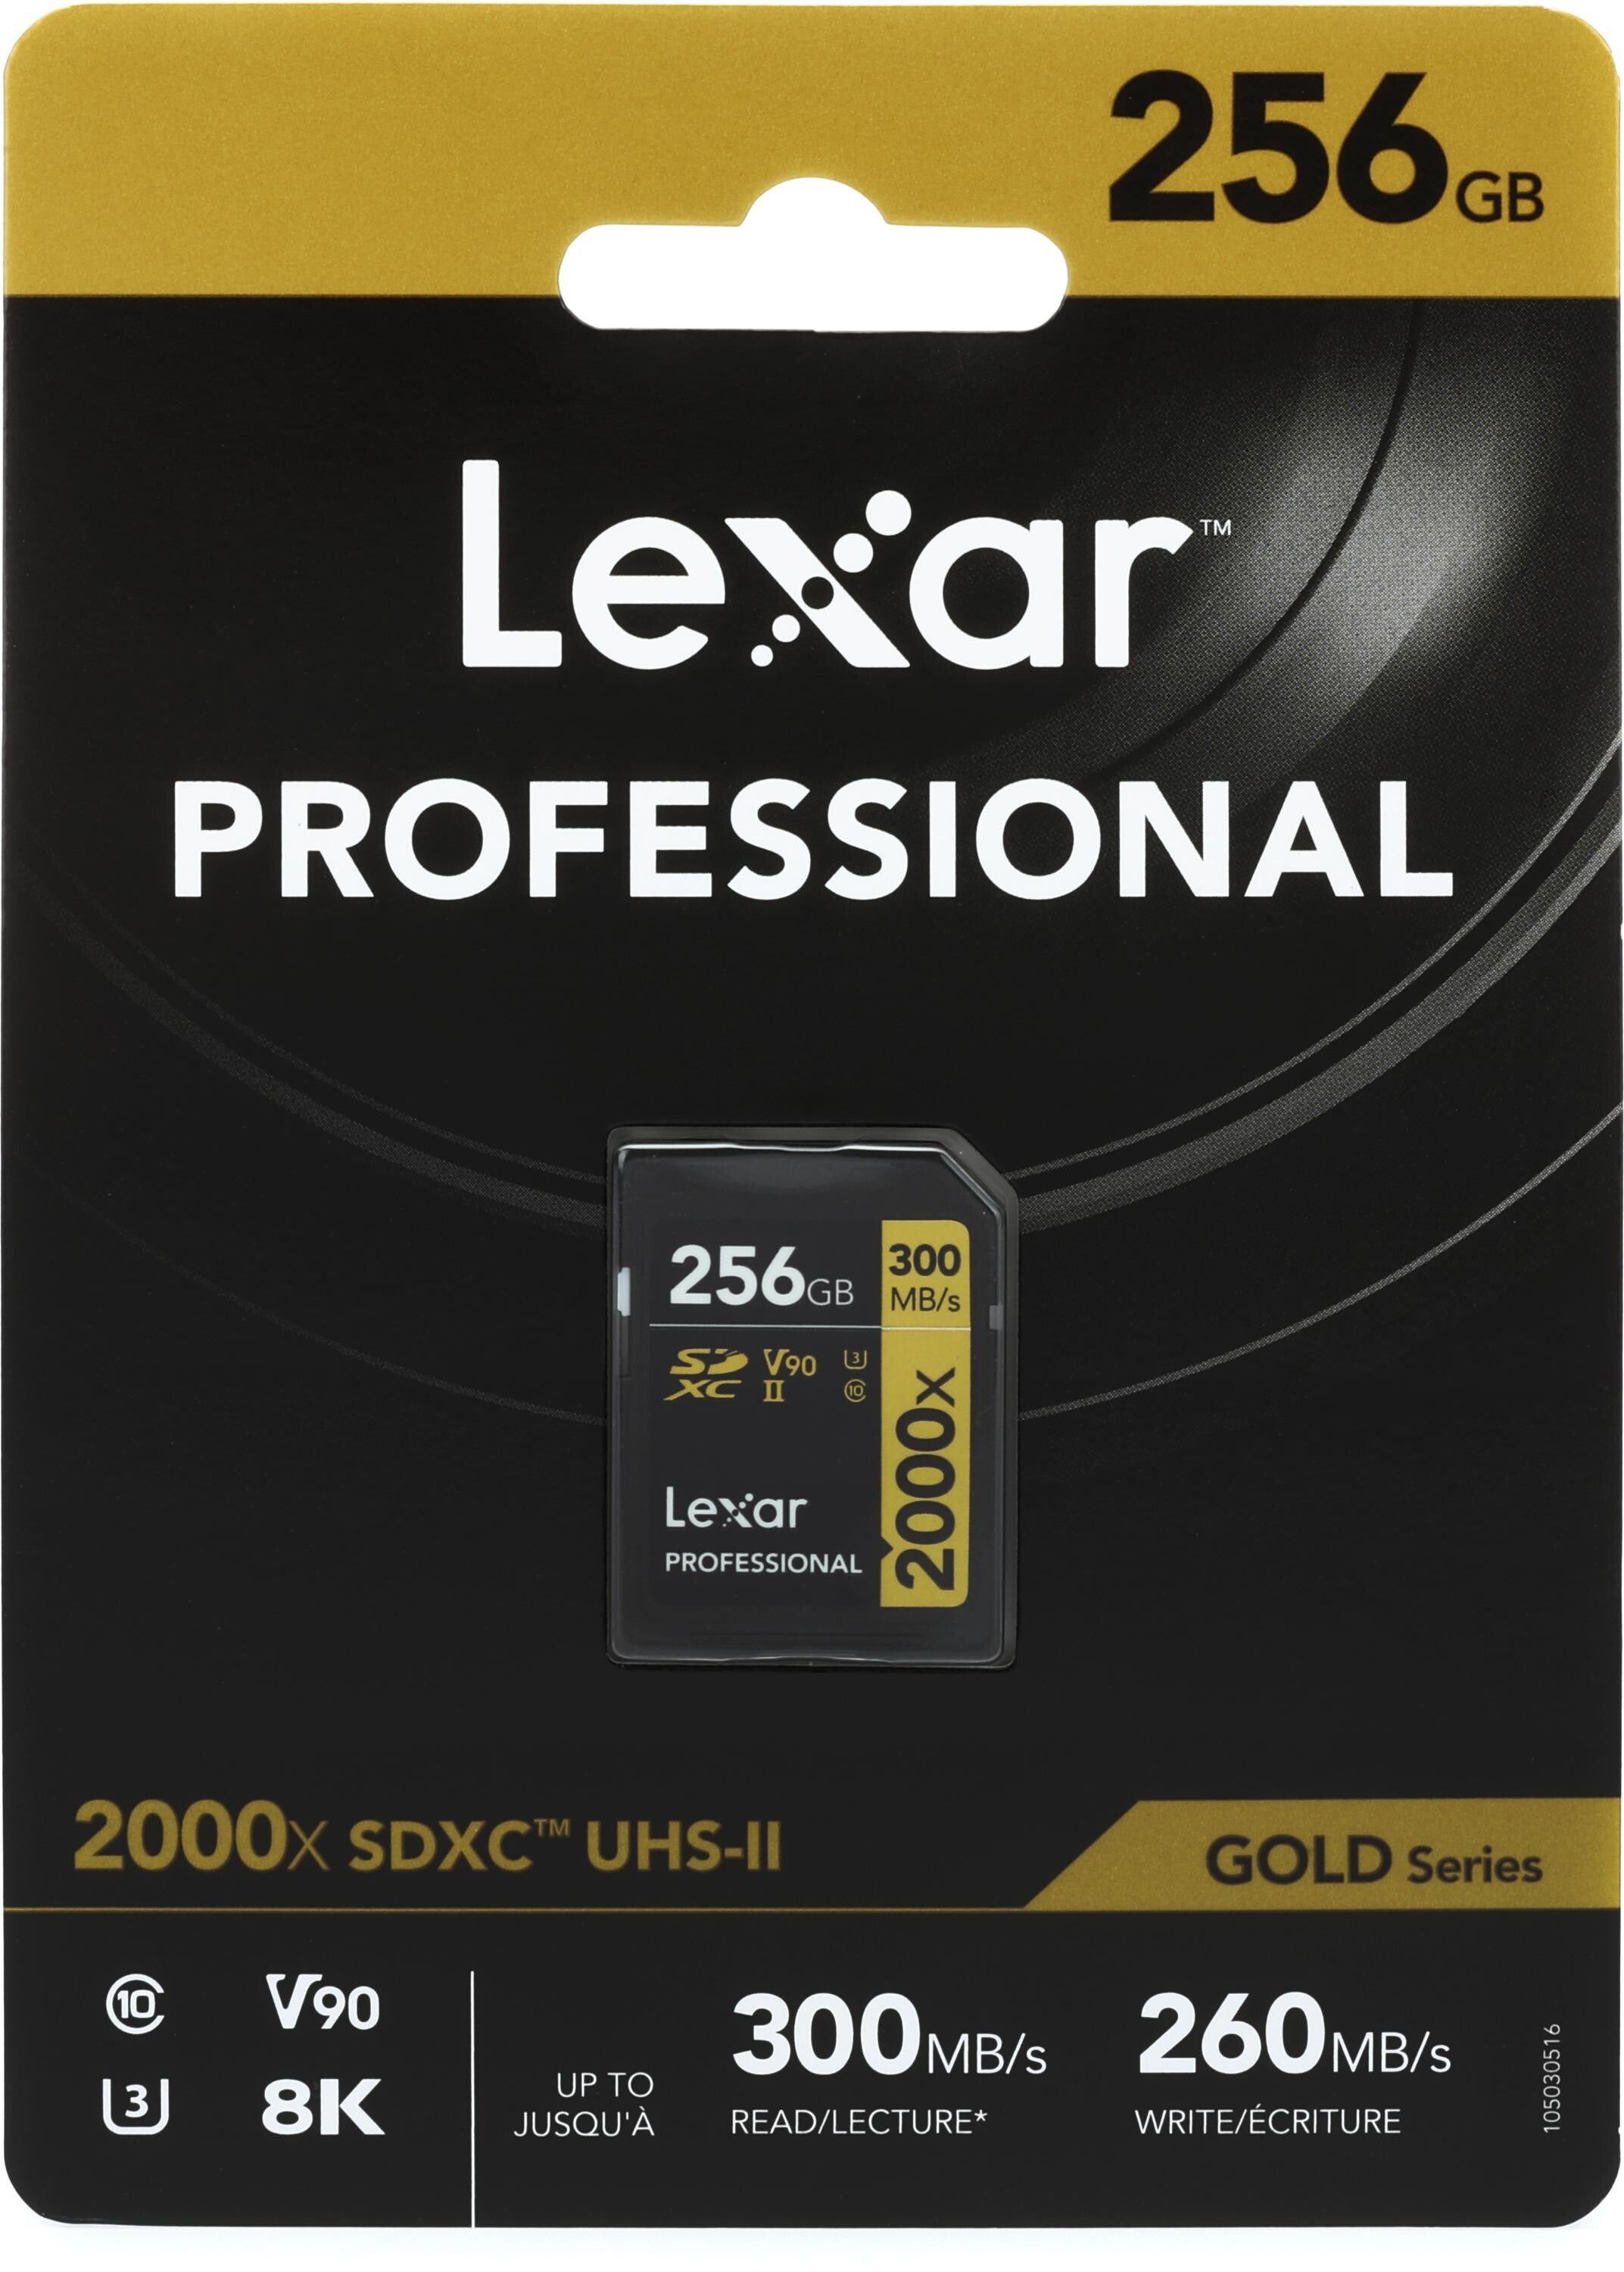 Lexar Professional 2000x SDHC/SDXC UHS-II Card Gold Series - 256GB